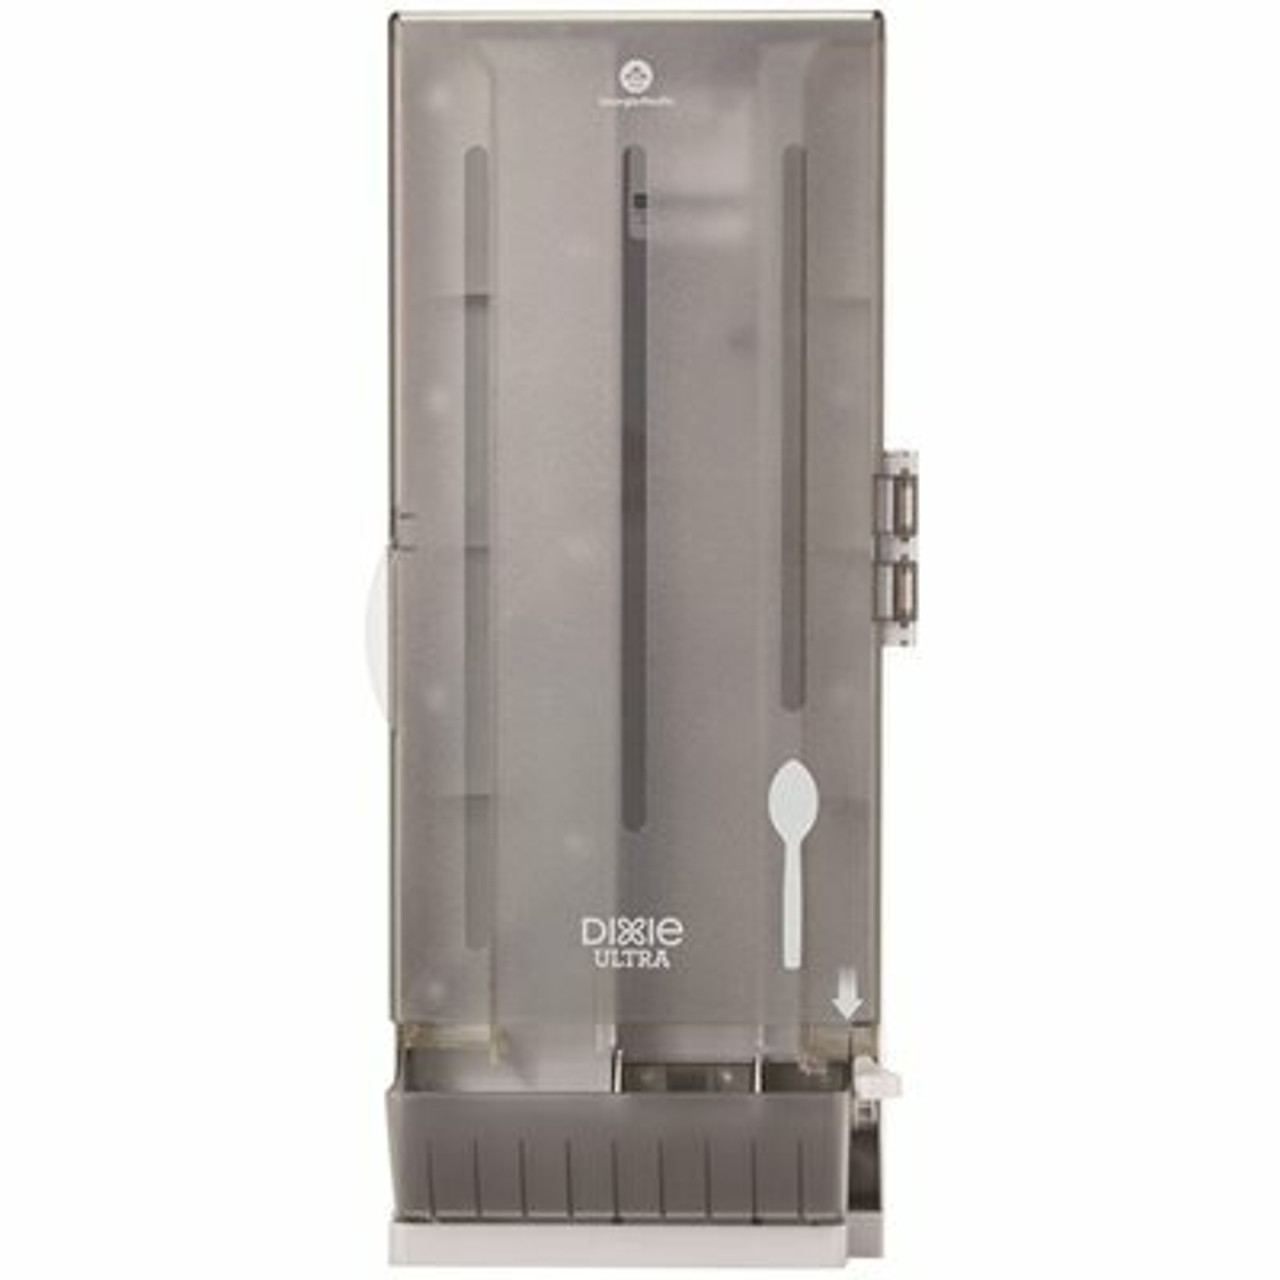 Series-O Classic Combo Spoon Dispenser, Translucent Black, 1 Dispenser